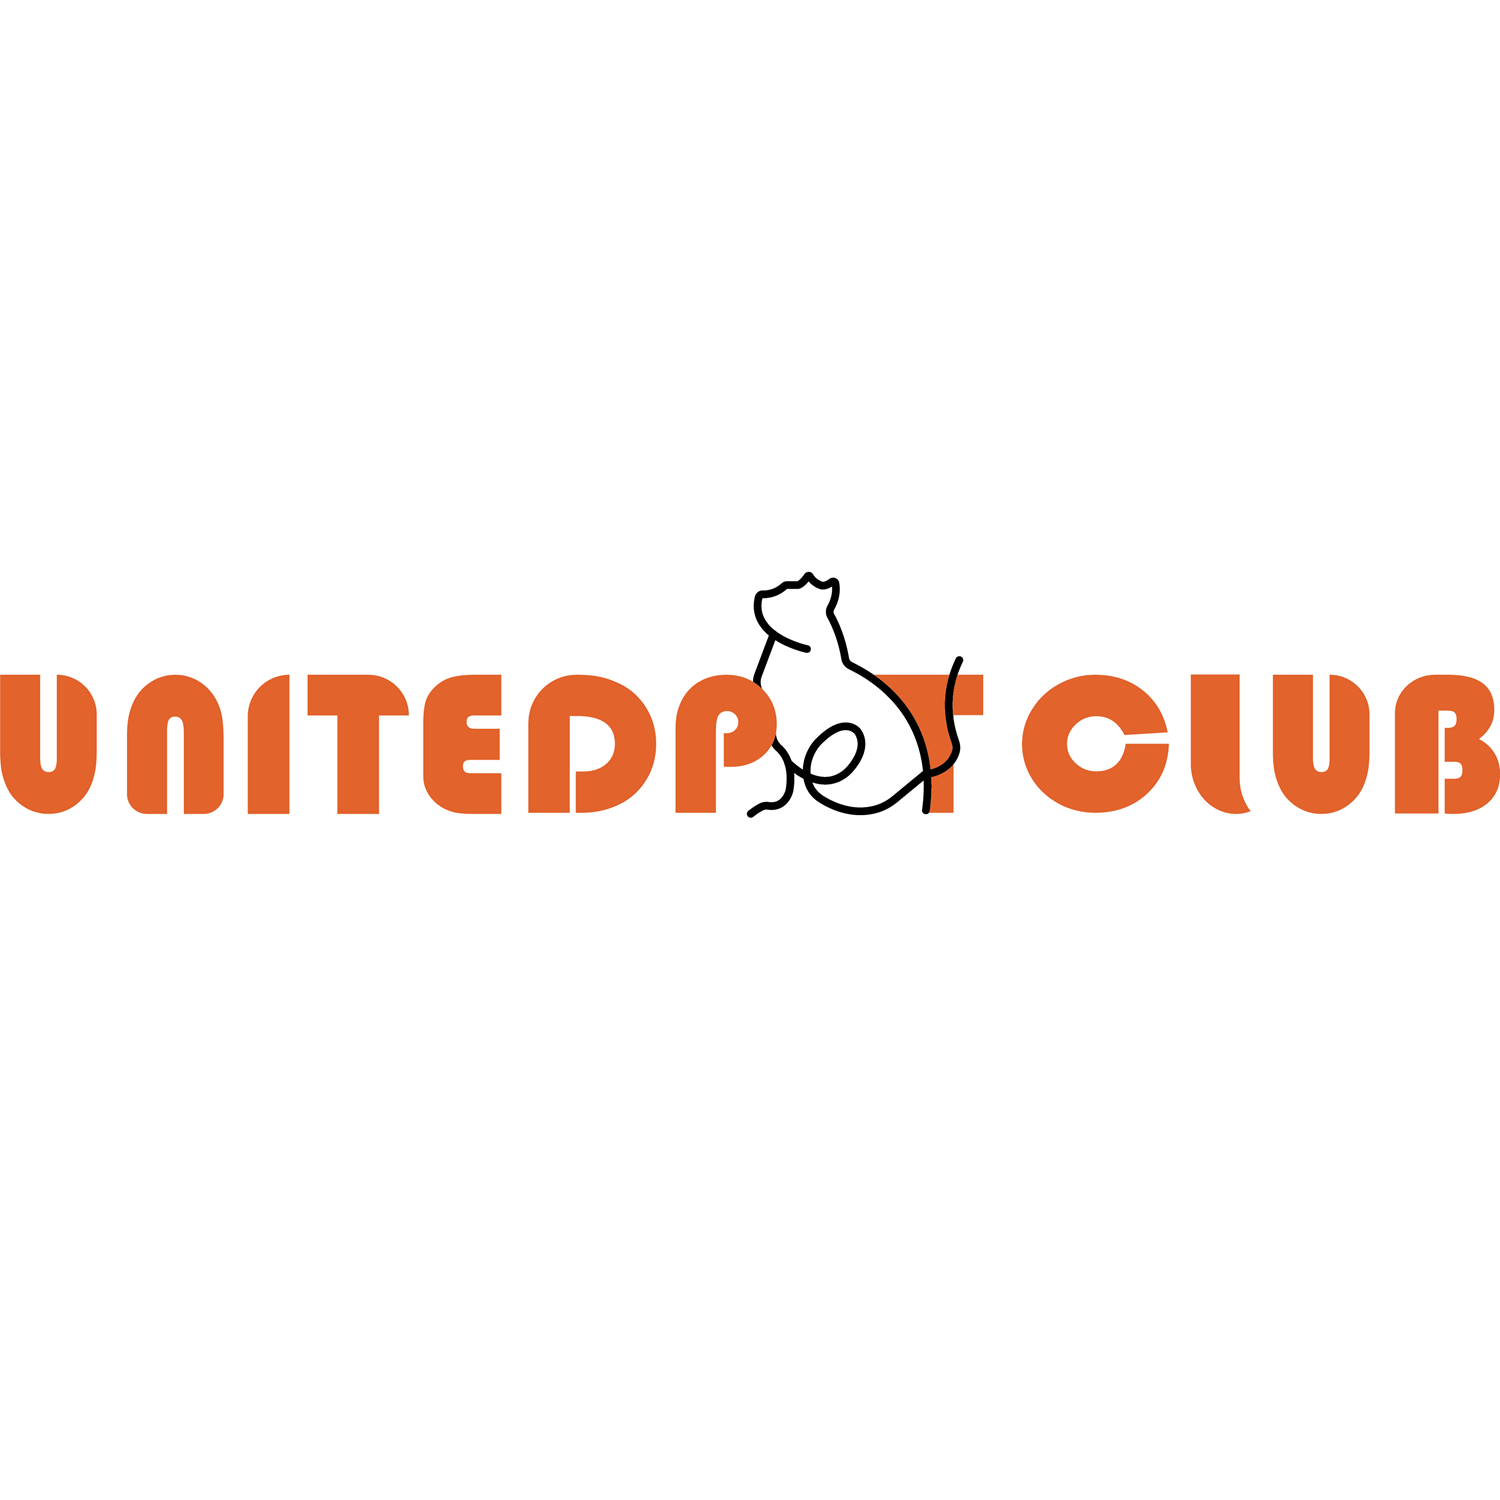 United Pet Club Logo